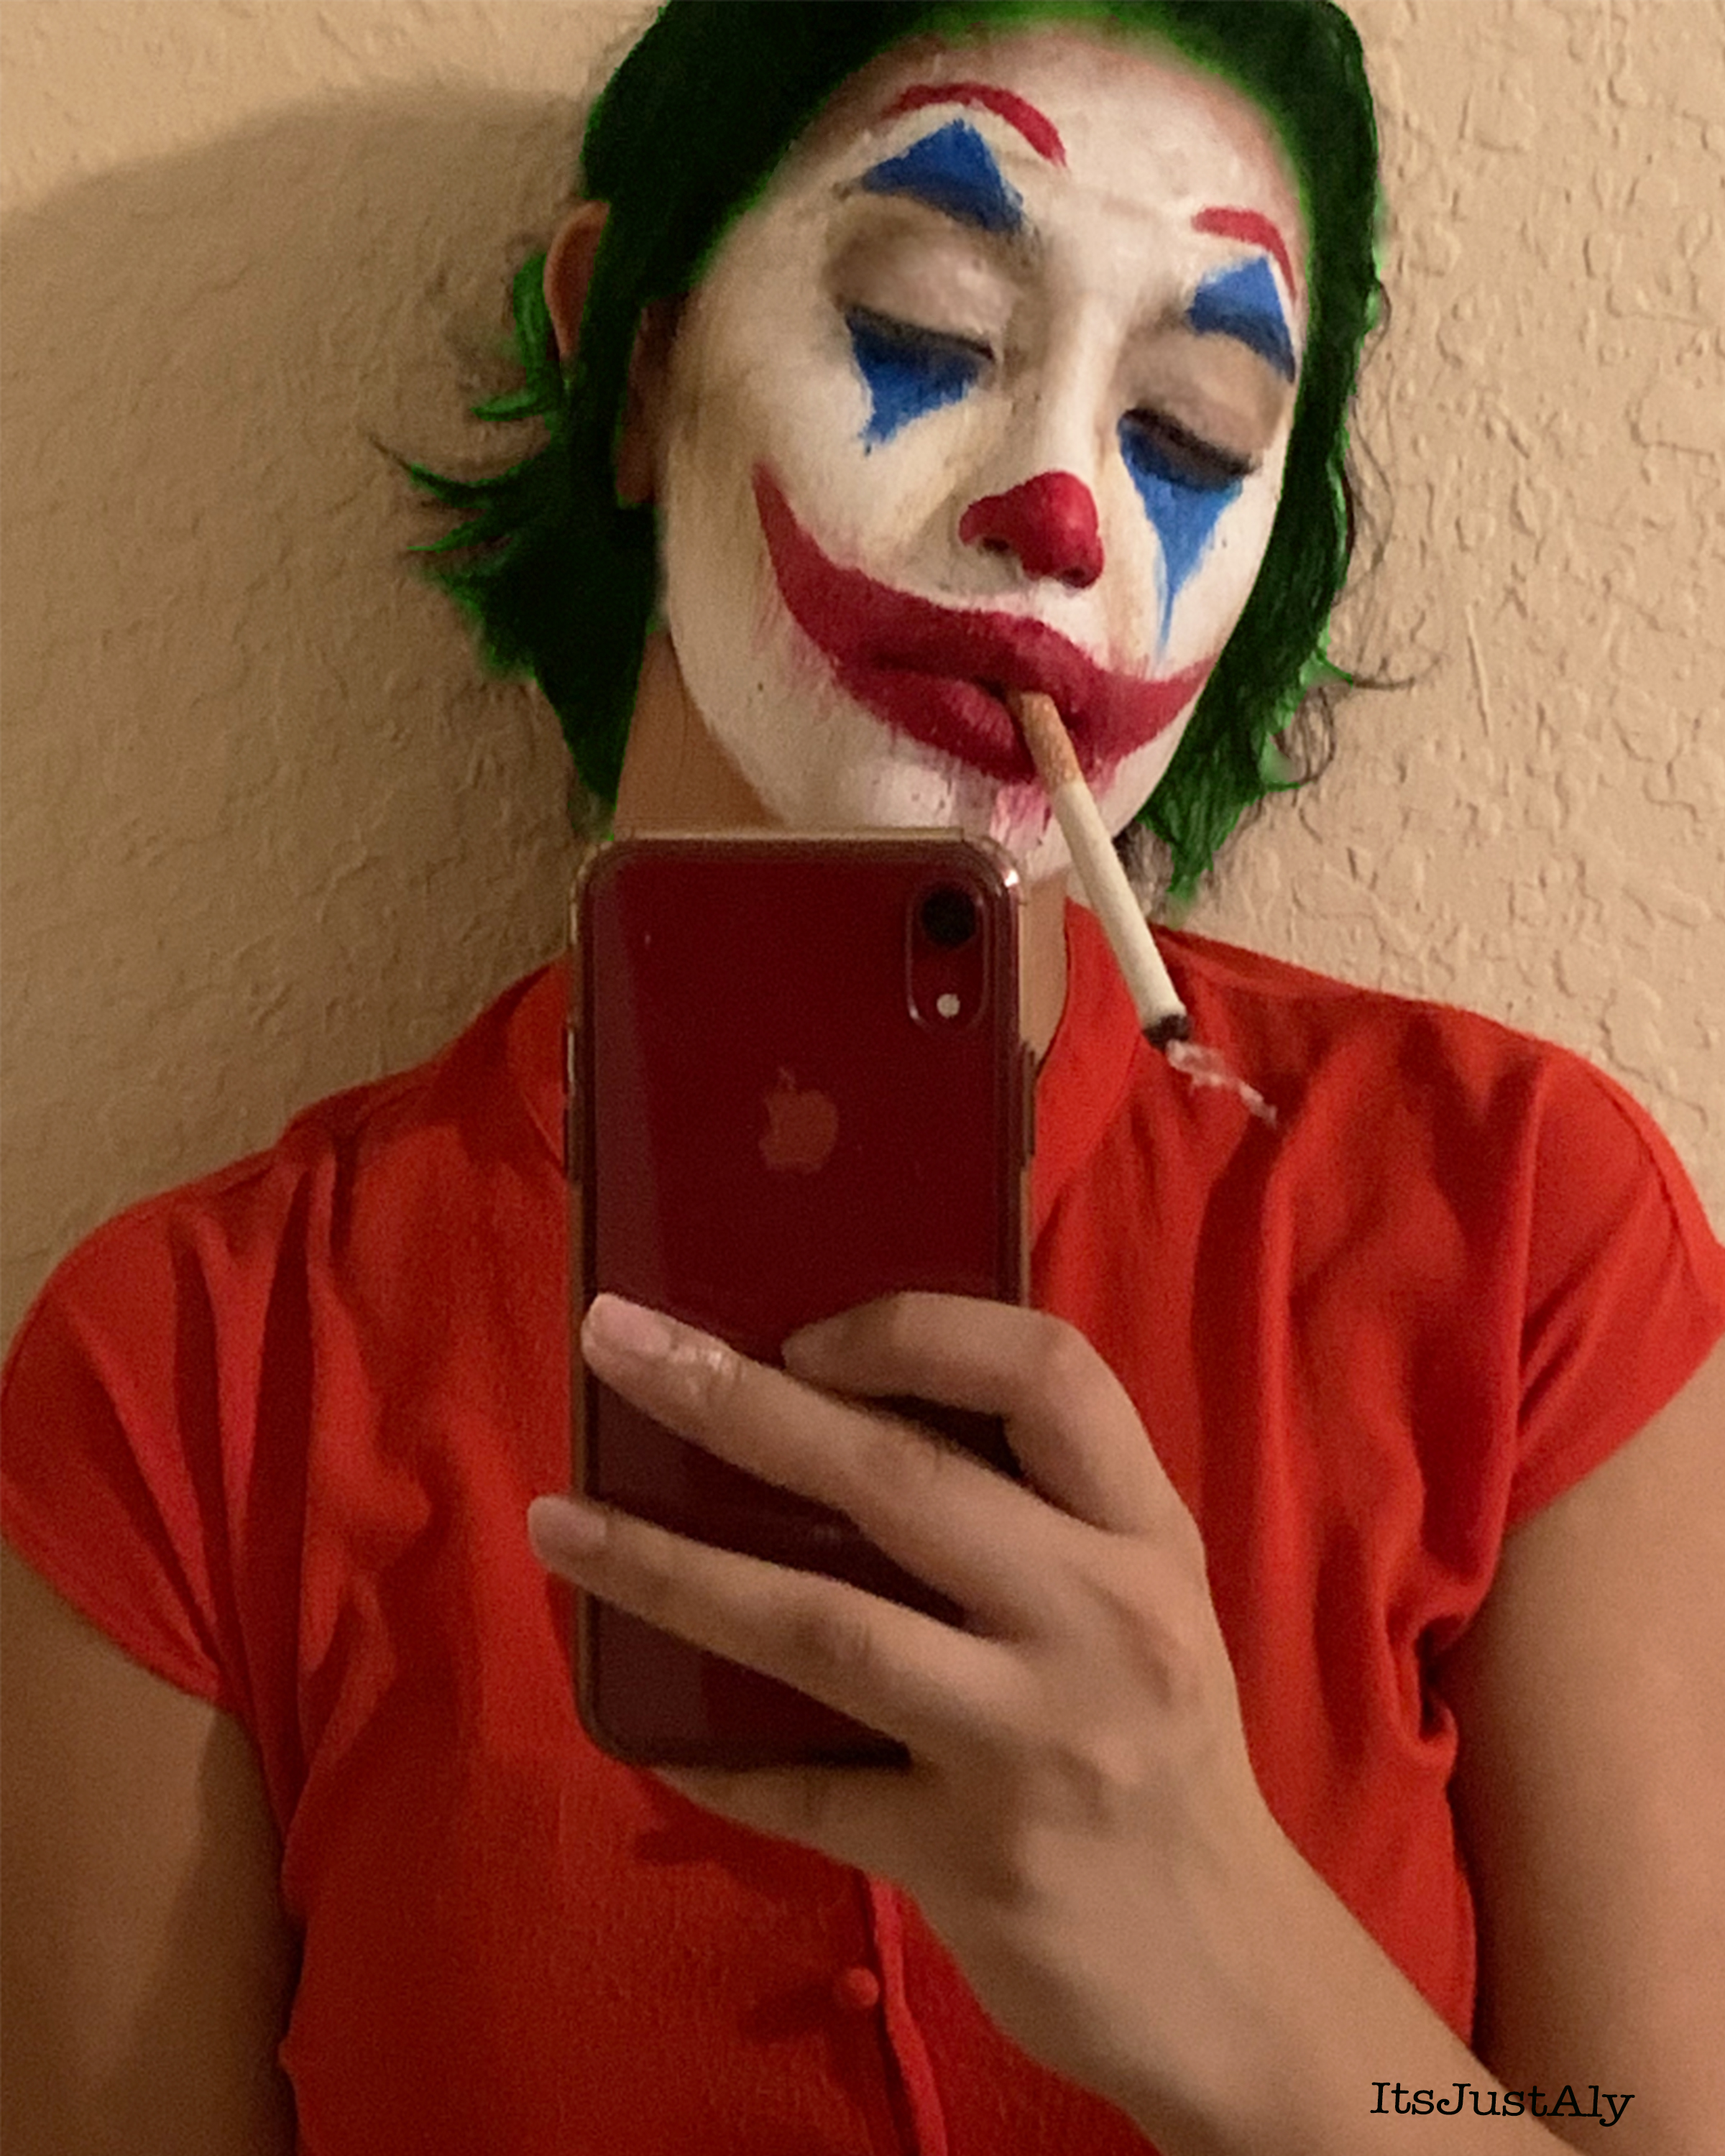 Joker Makeup By Itsjustaly On Deviantart